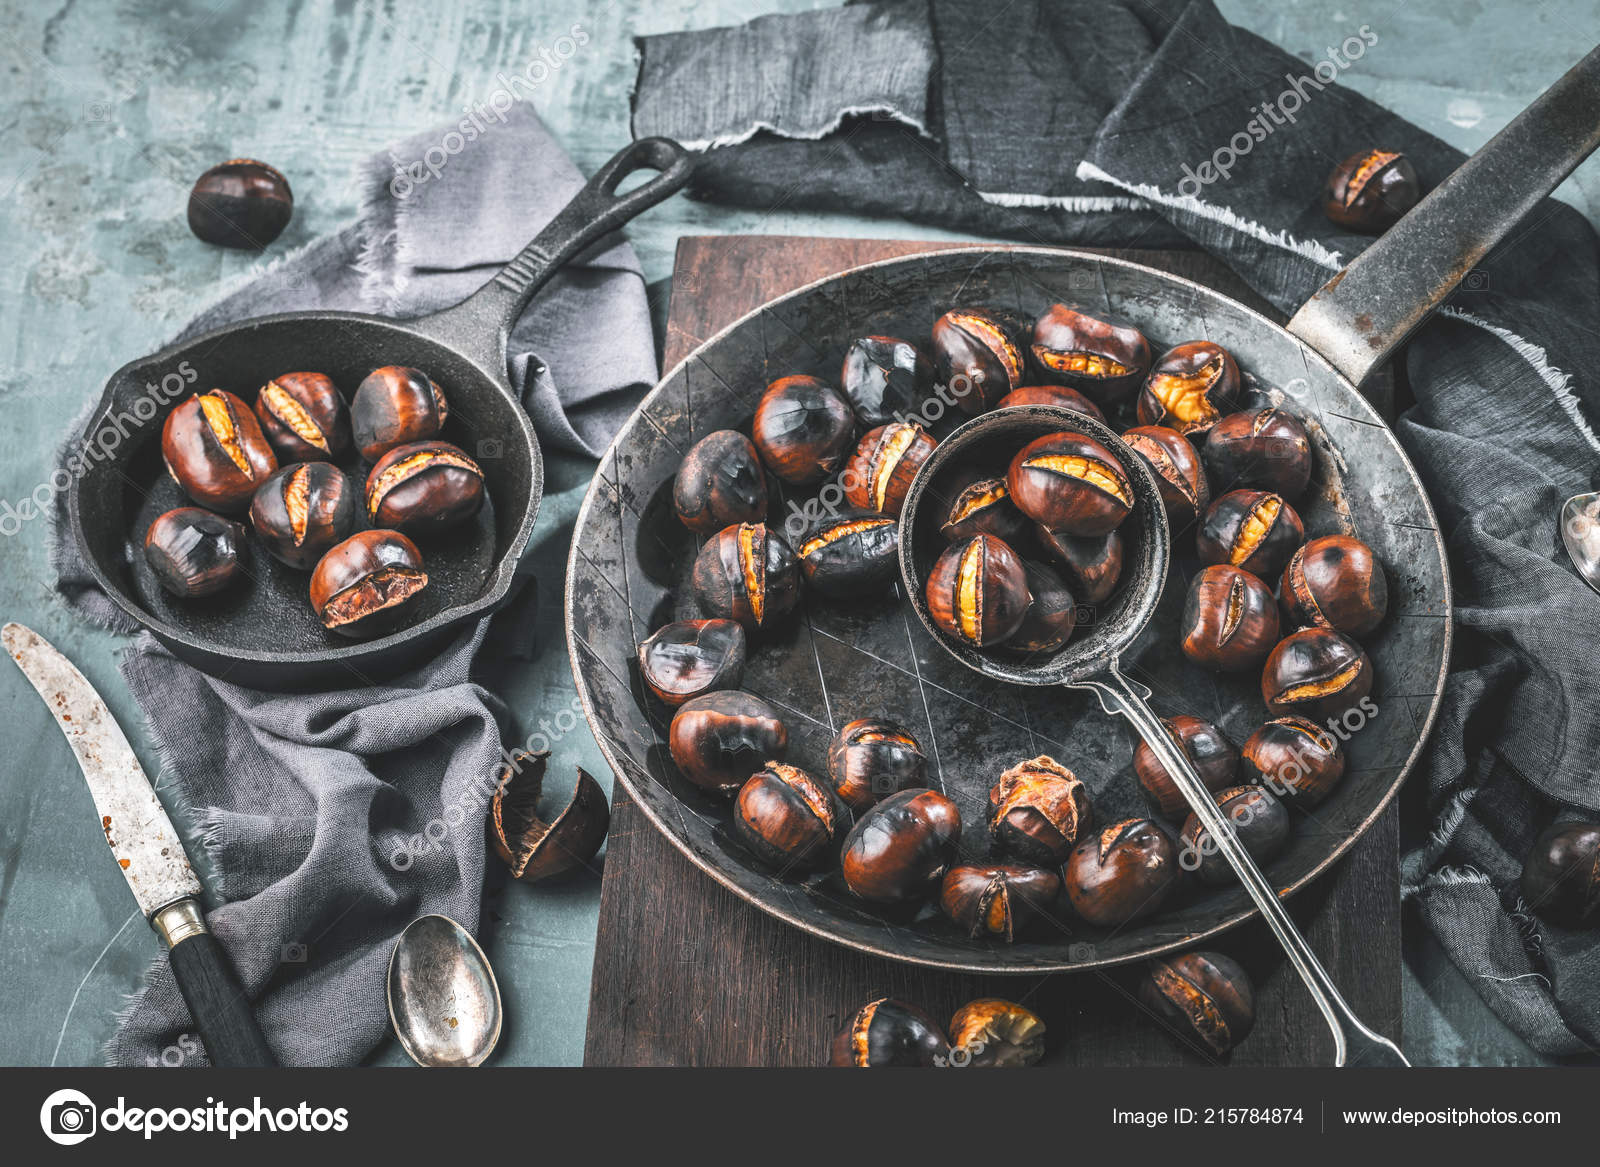 https://st4.depositphotos.com/19157714/21578/i/1600/depositphotos_215784874-stock-photo-roasted-chestnuts-served-chestnut-pan.jpg